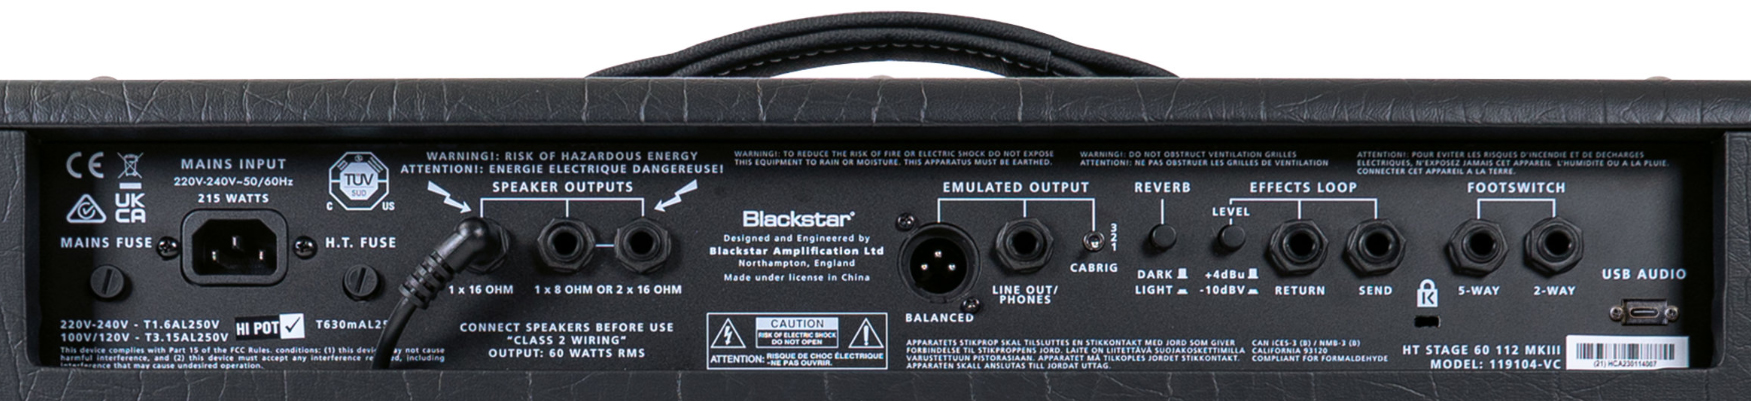 Blackstar Ht Venue Stage 60 112 Mkiii 60w 1x12 El34 - Ampli Guitare Électrique Combo - Variation 4